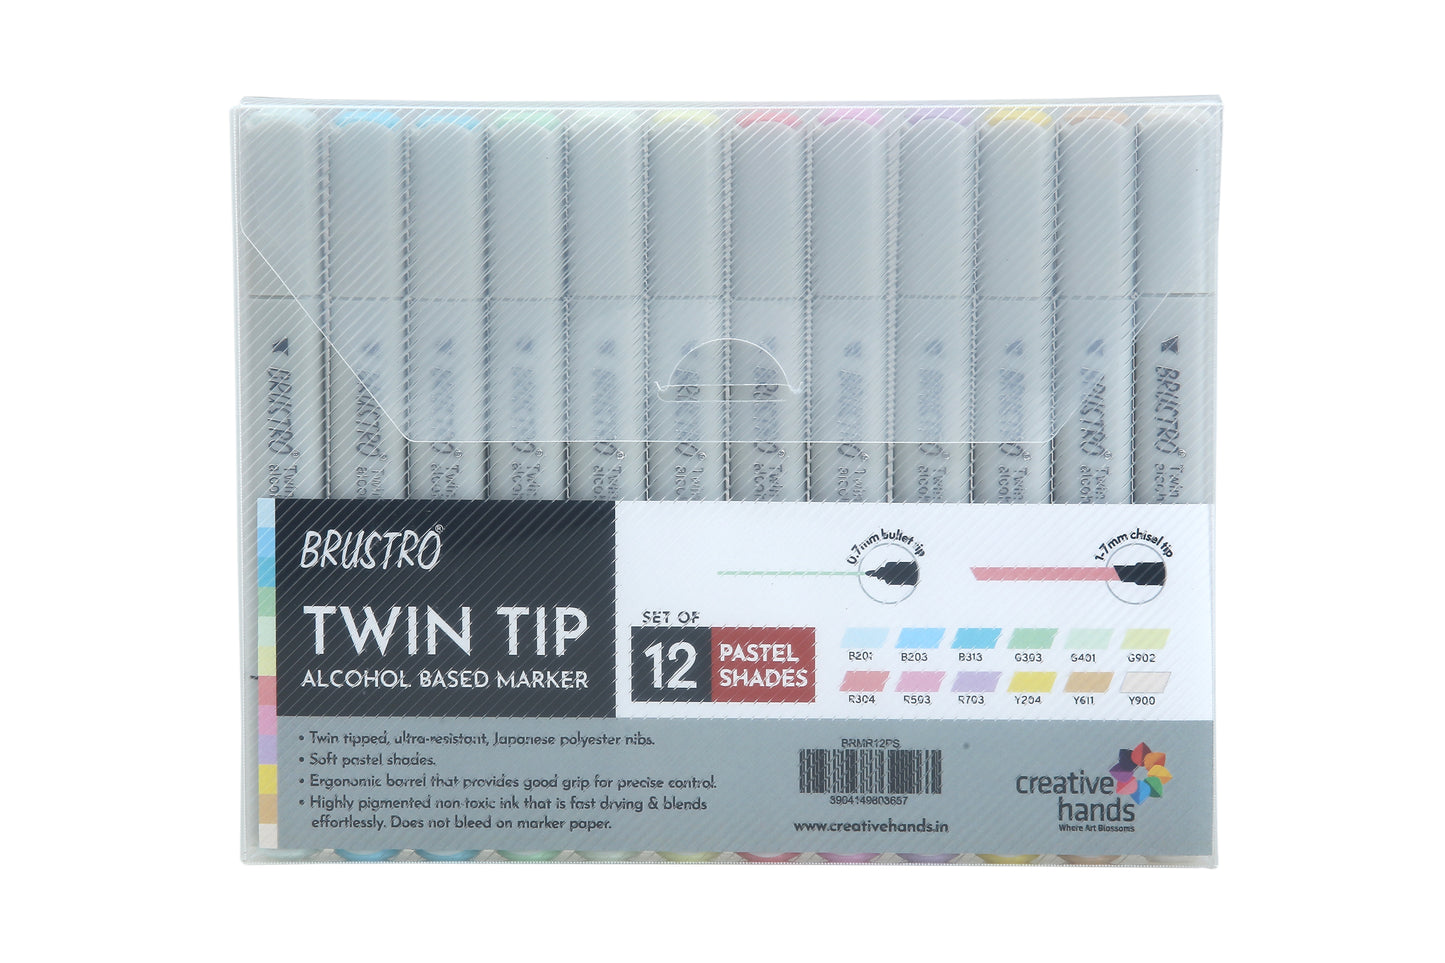 Brustro Twin Tip Alcohol Based Marker Set of 12 - Pastel Tones